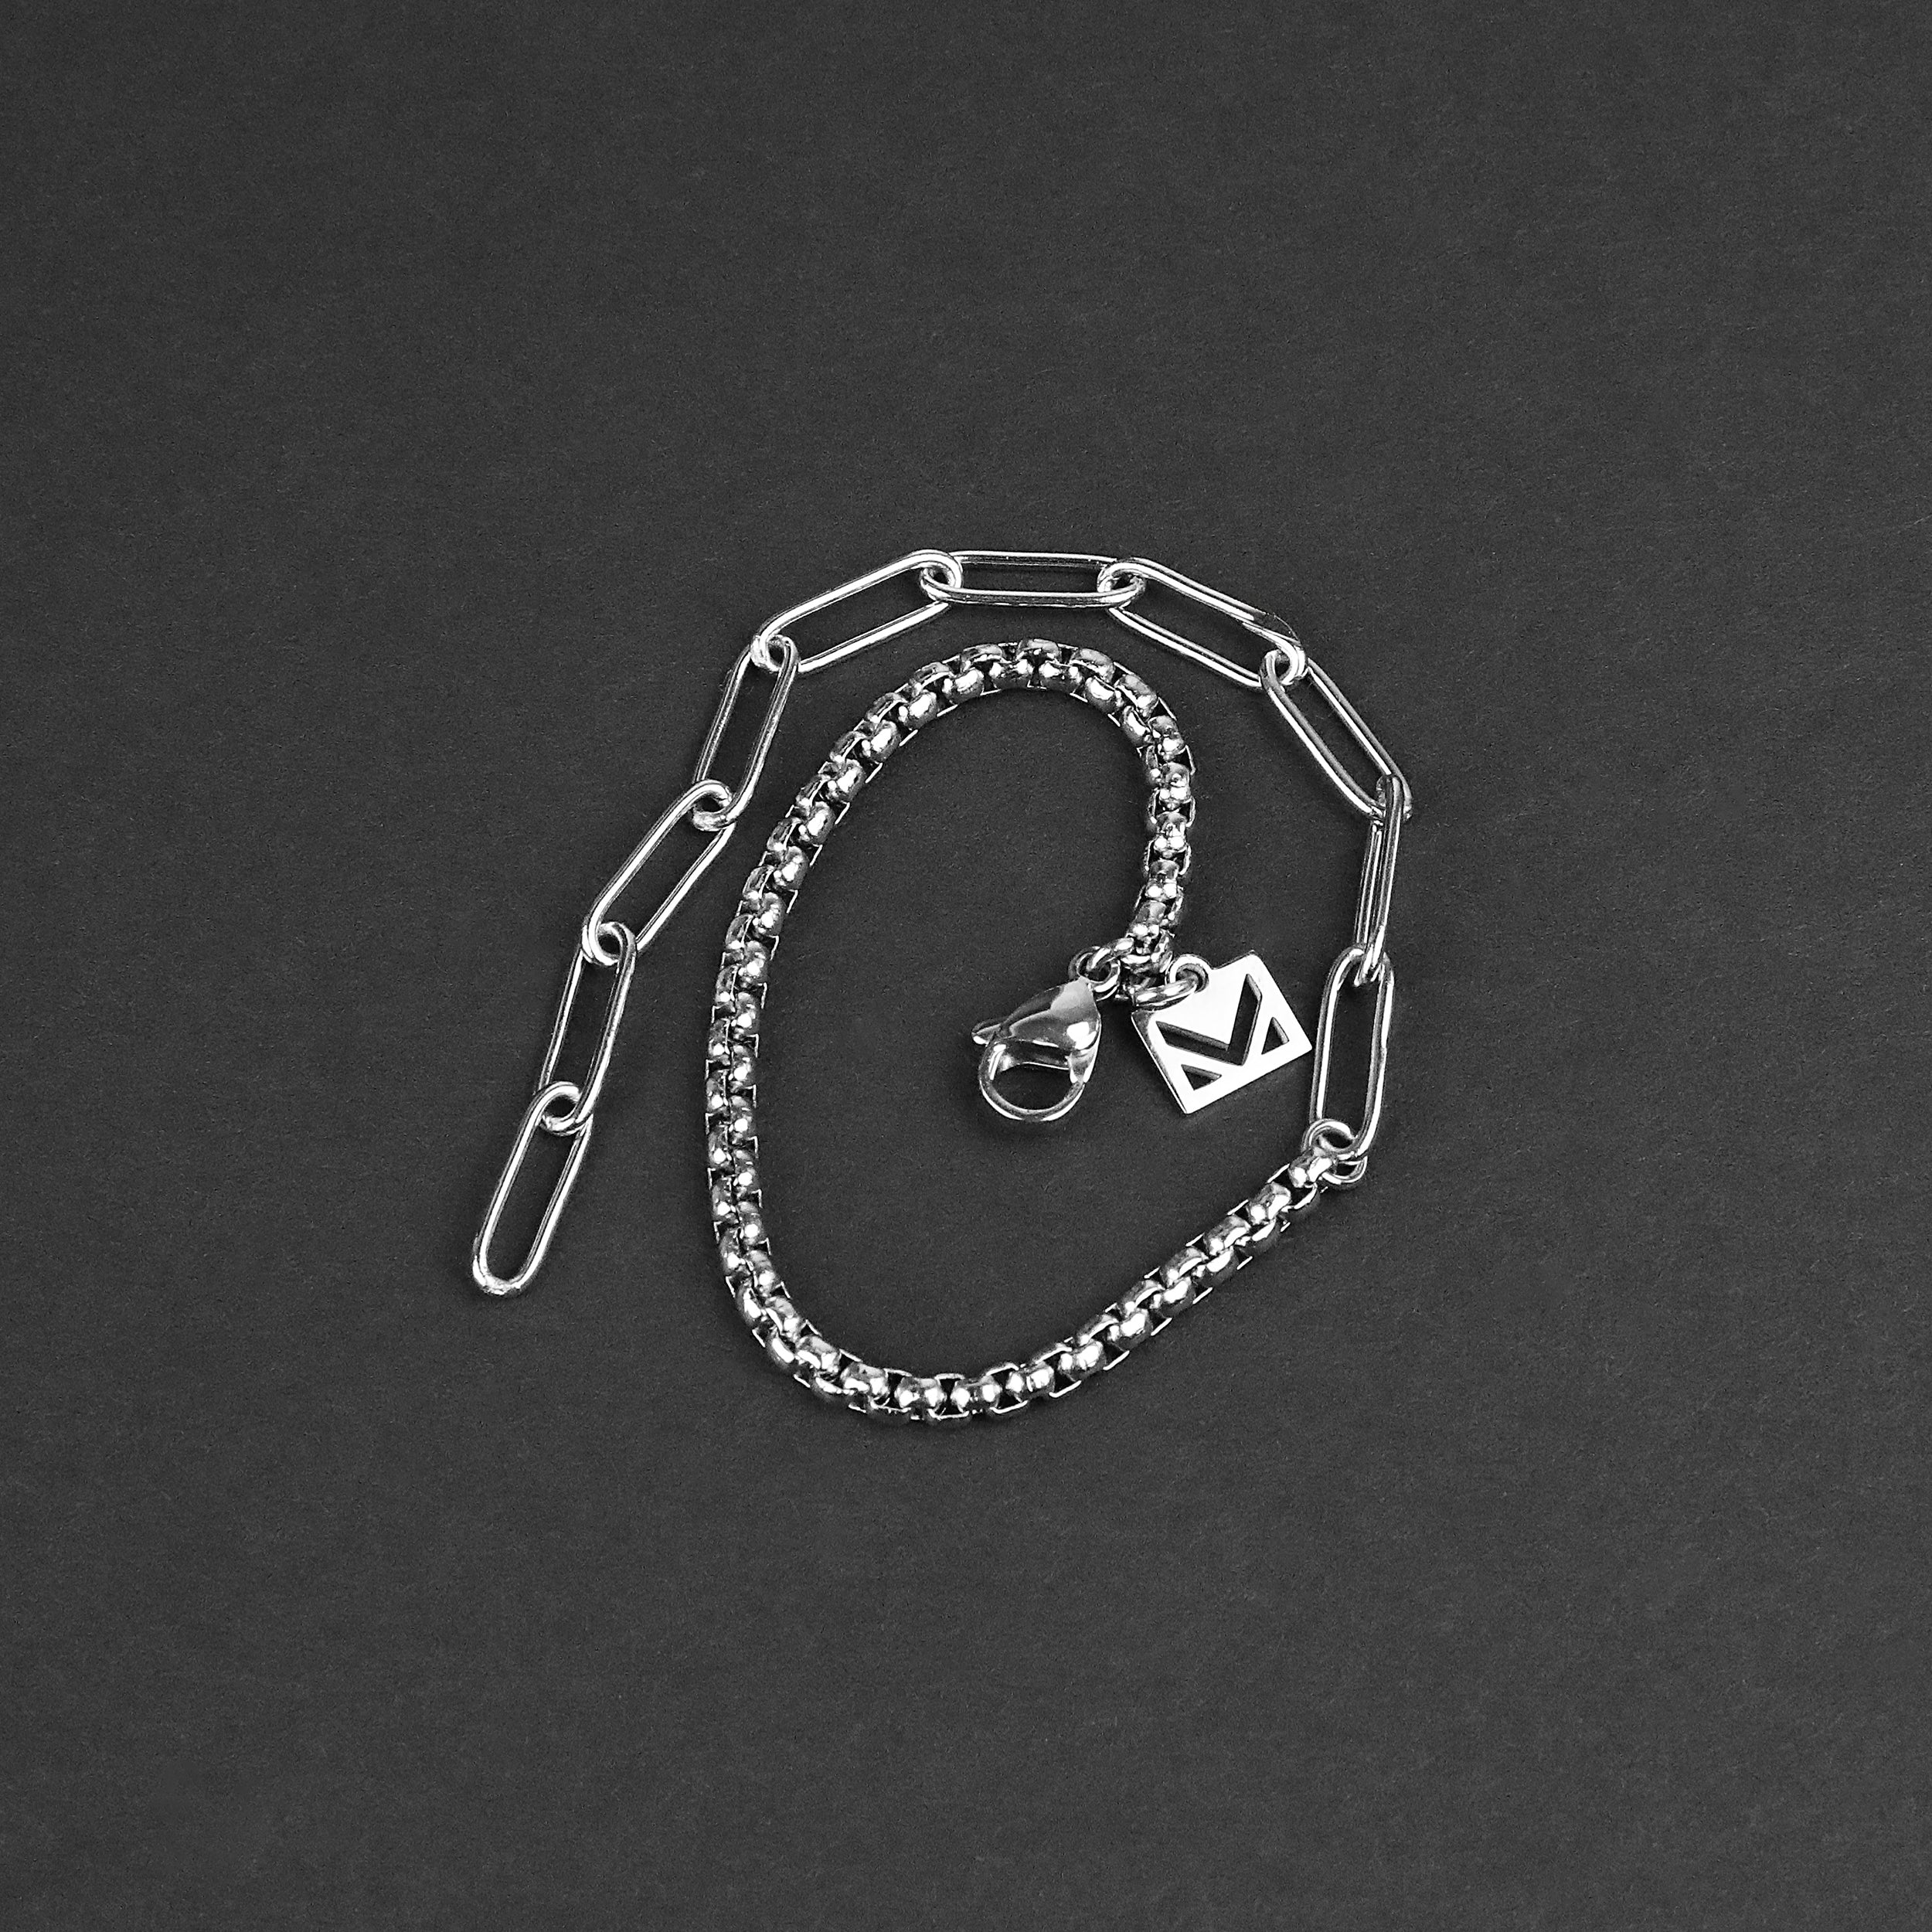 Clip-Box Hybrid Chain Bracelet - Silver 4mm